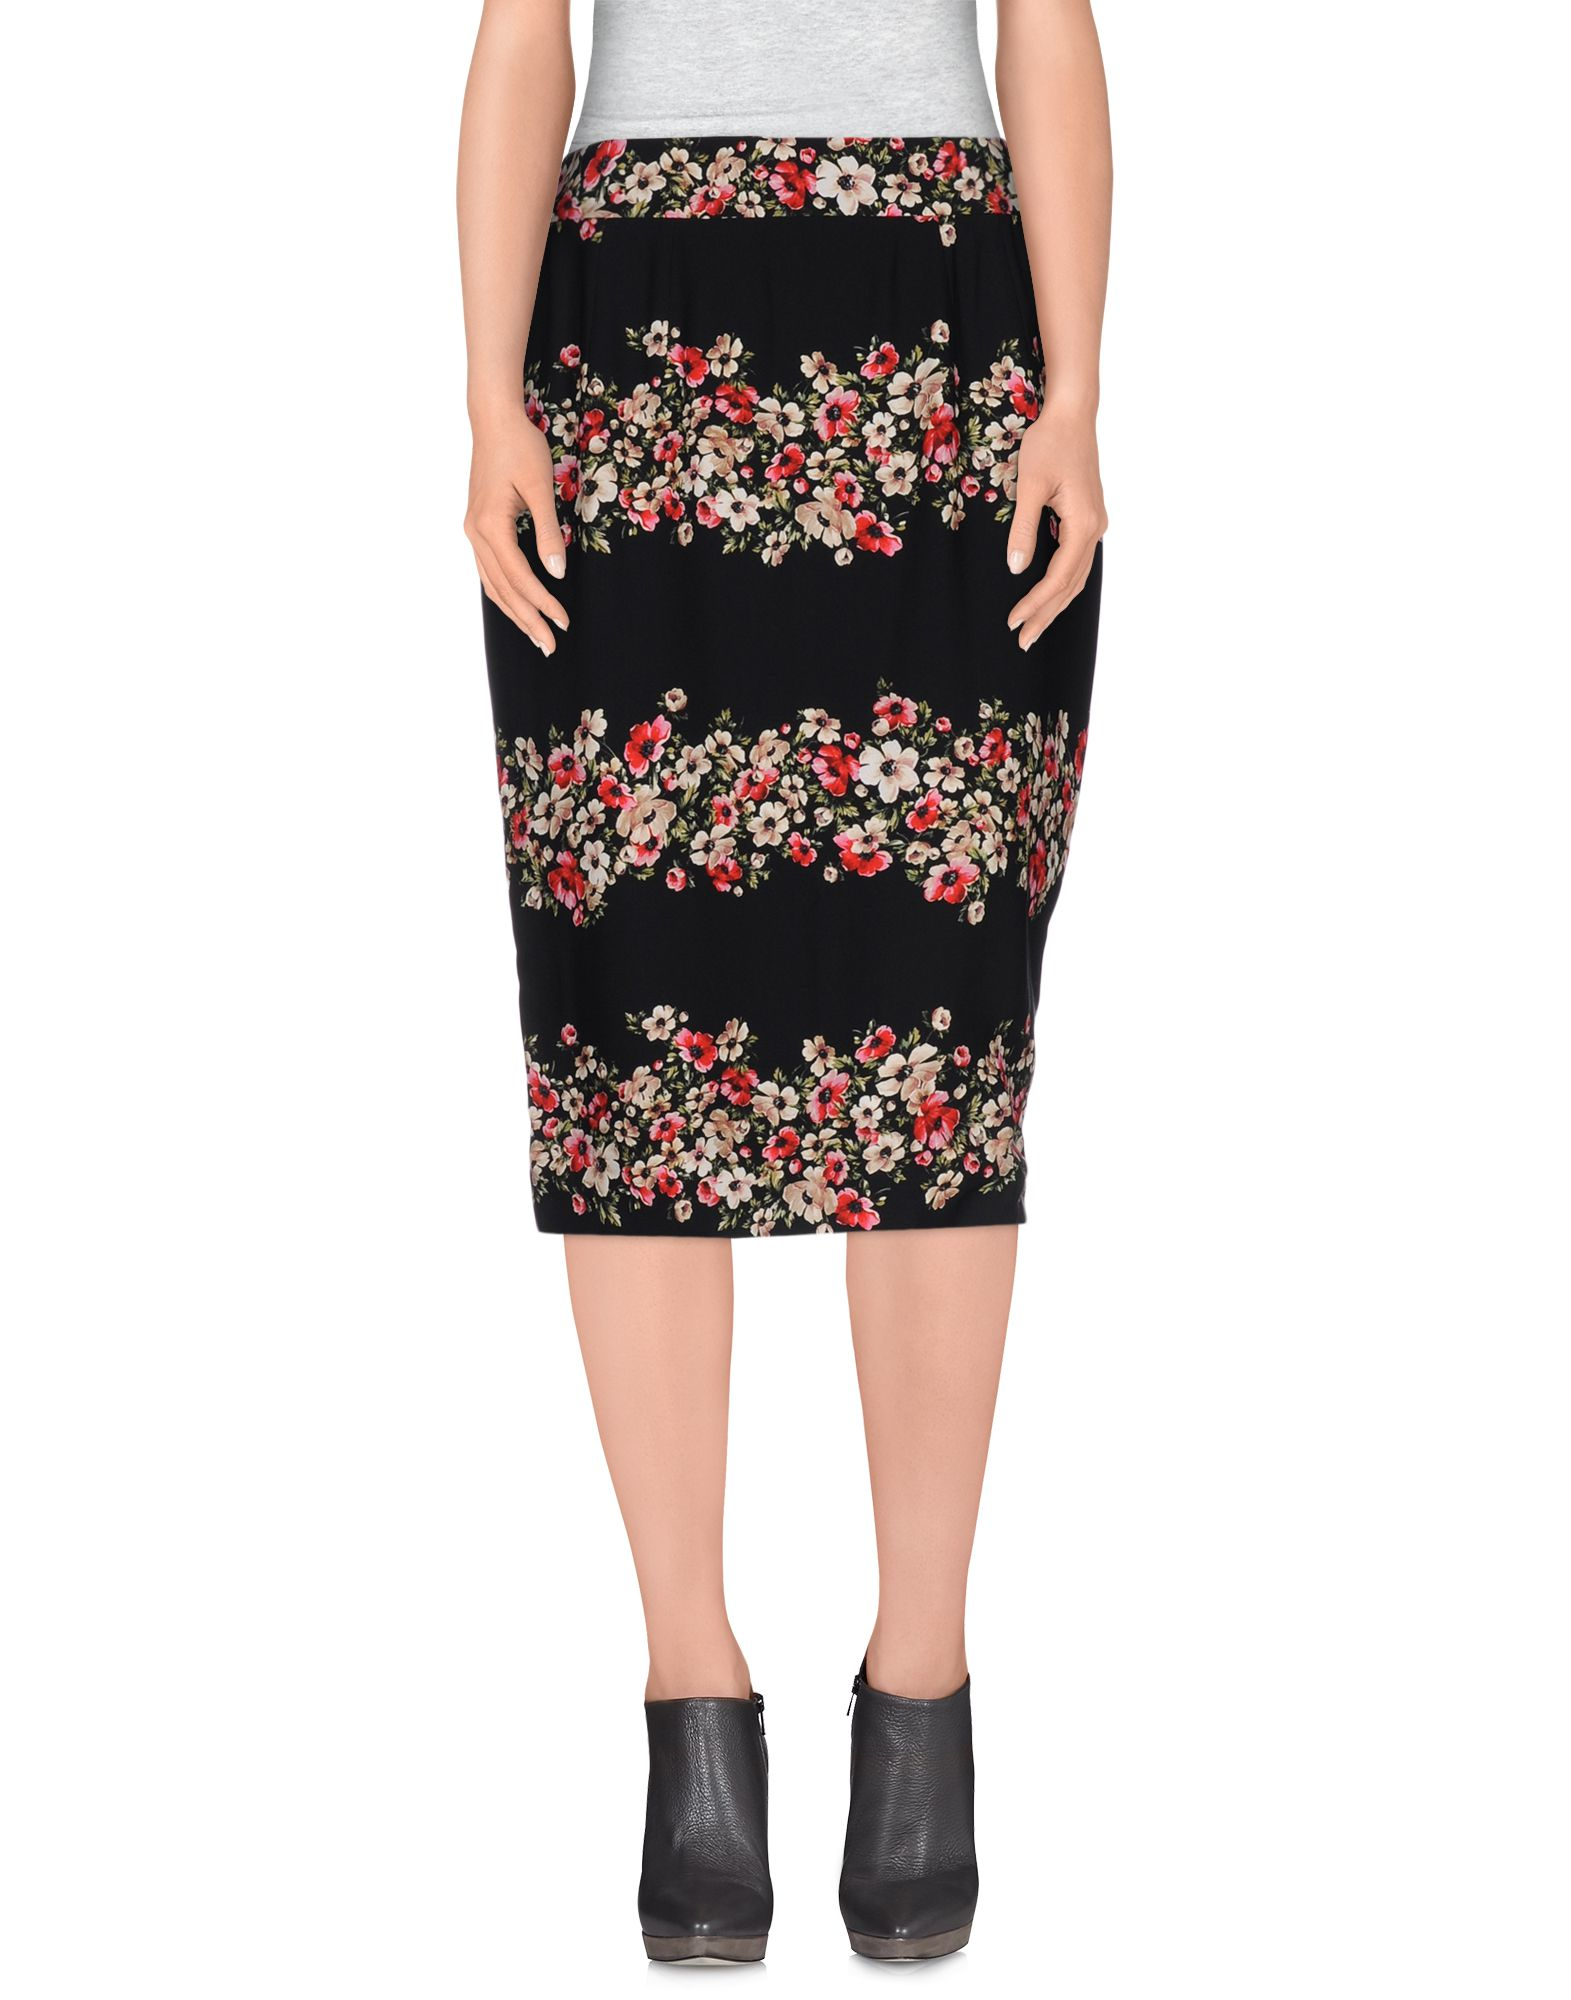 Dolce & Gabbana Floral Print Pencil Skirt in Black - Lyst